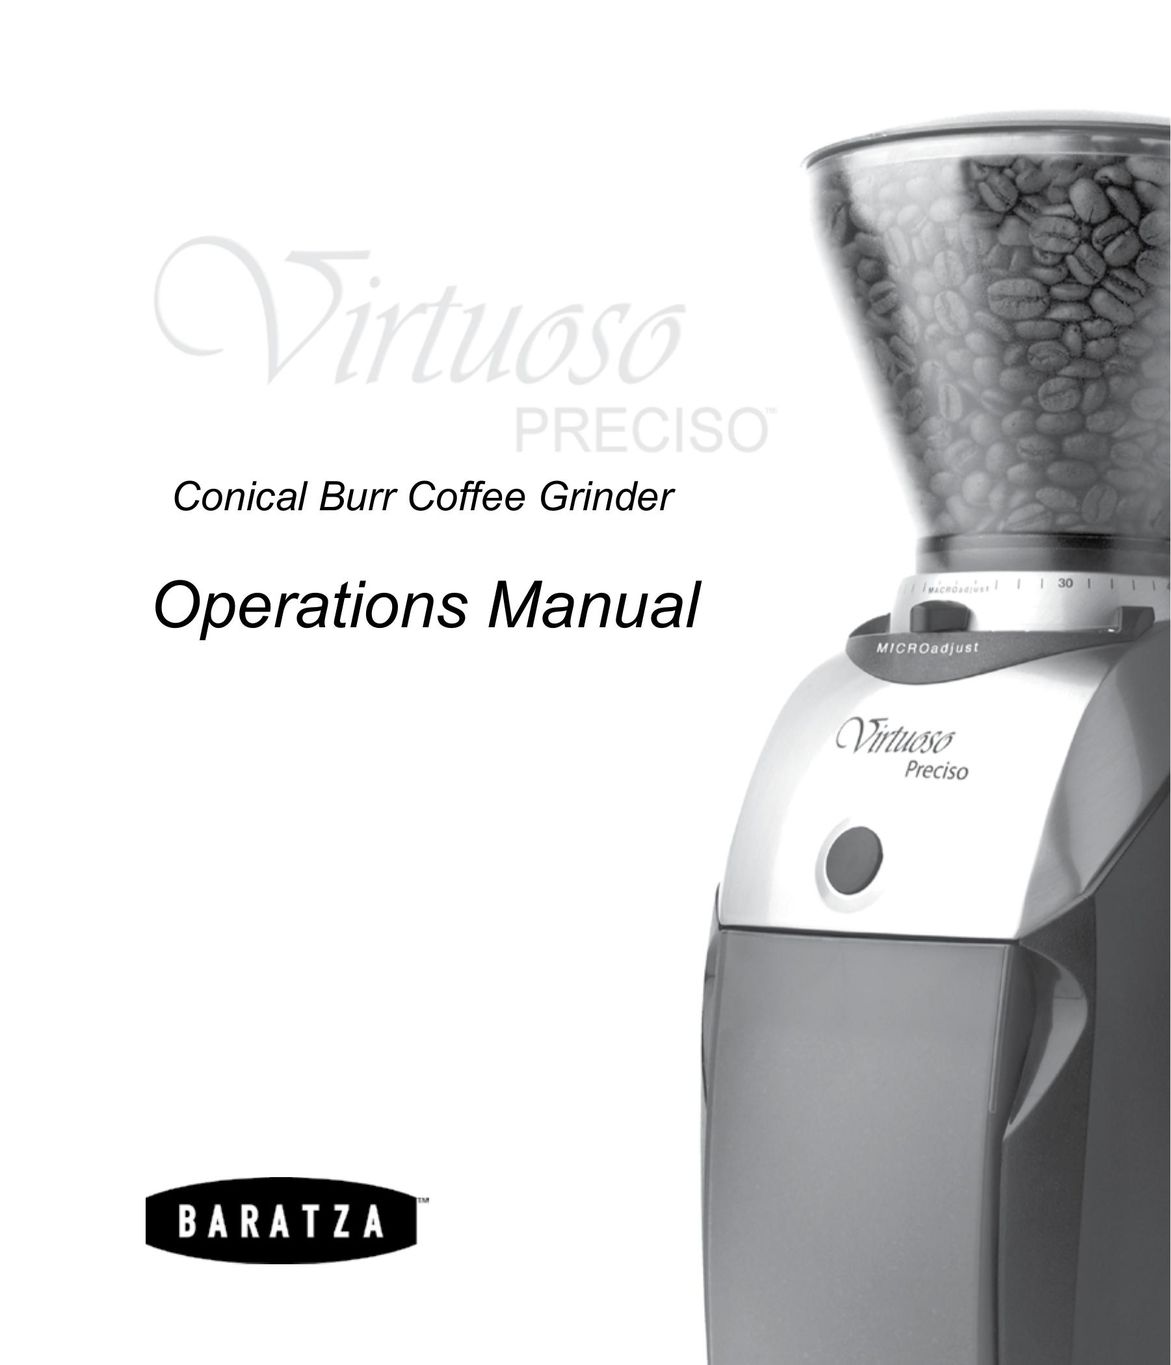 Baratza B-Virtuoso Coffee Grinder User Manual